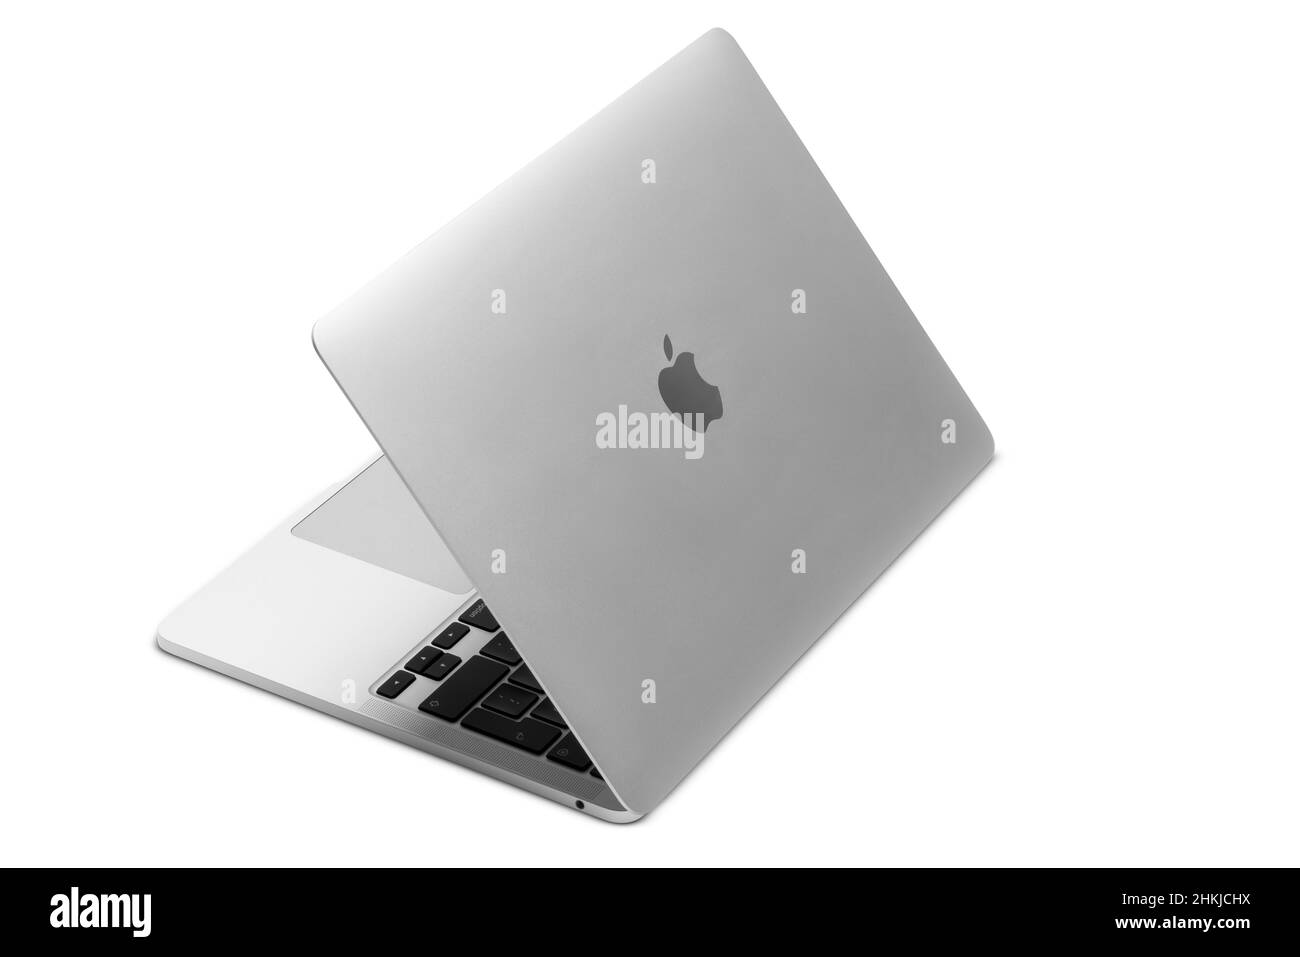 Izmir, Turkey - January 10, 2022: Half opened Apple Brand M1 Model Macbook pro laptop computer on a white background Stock Photo